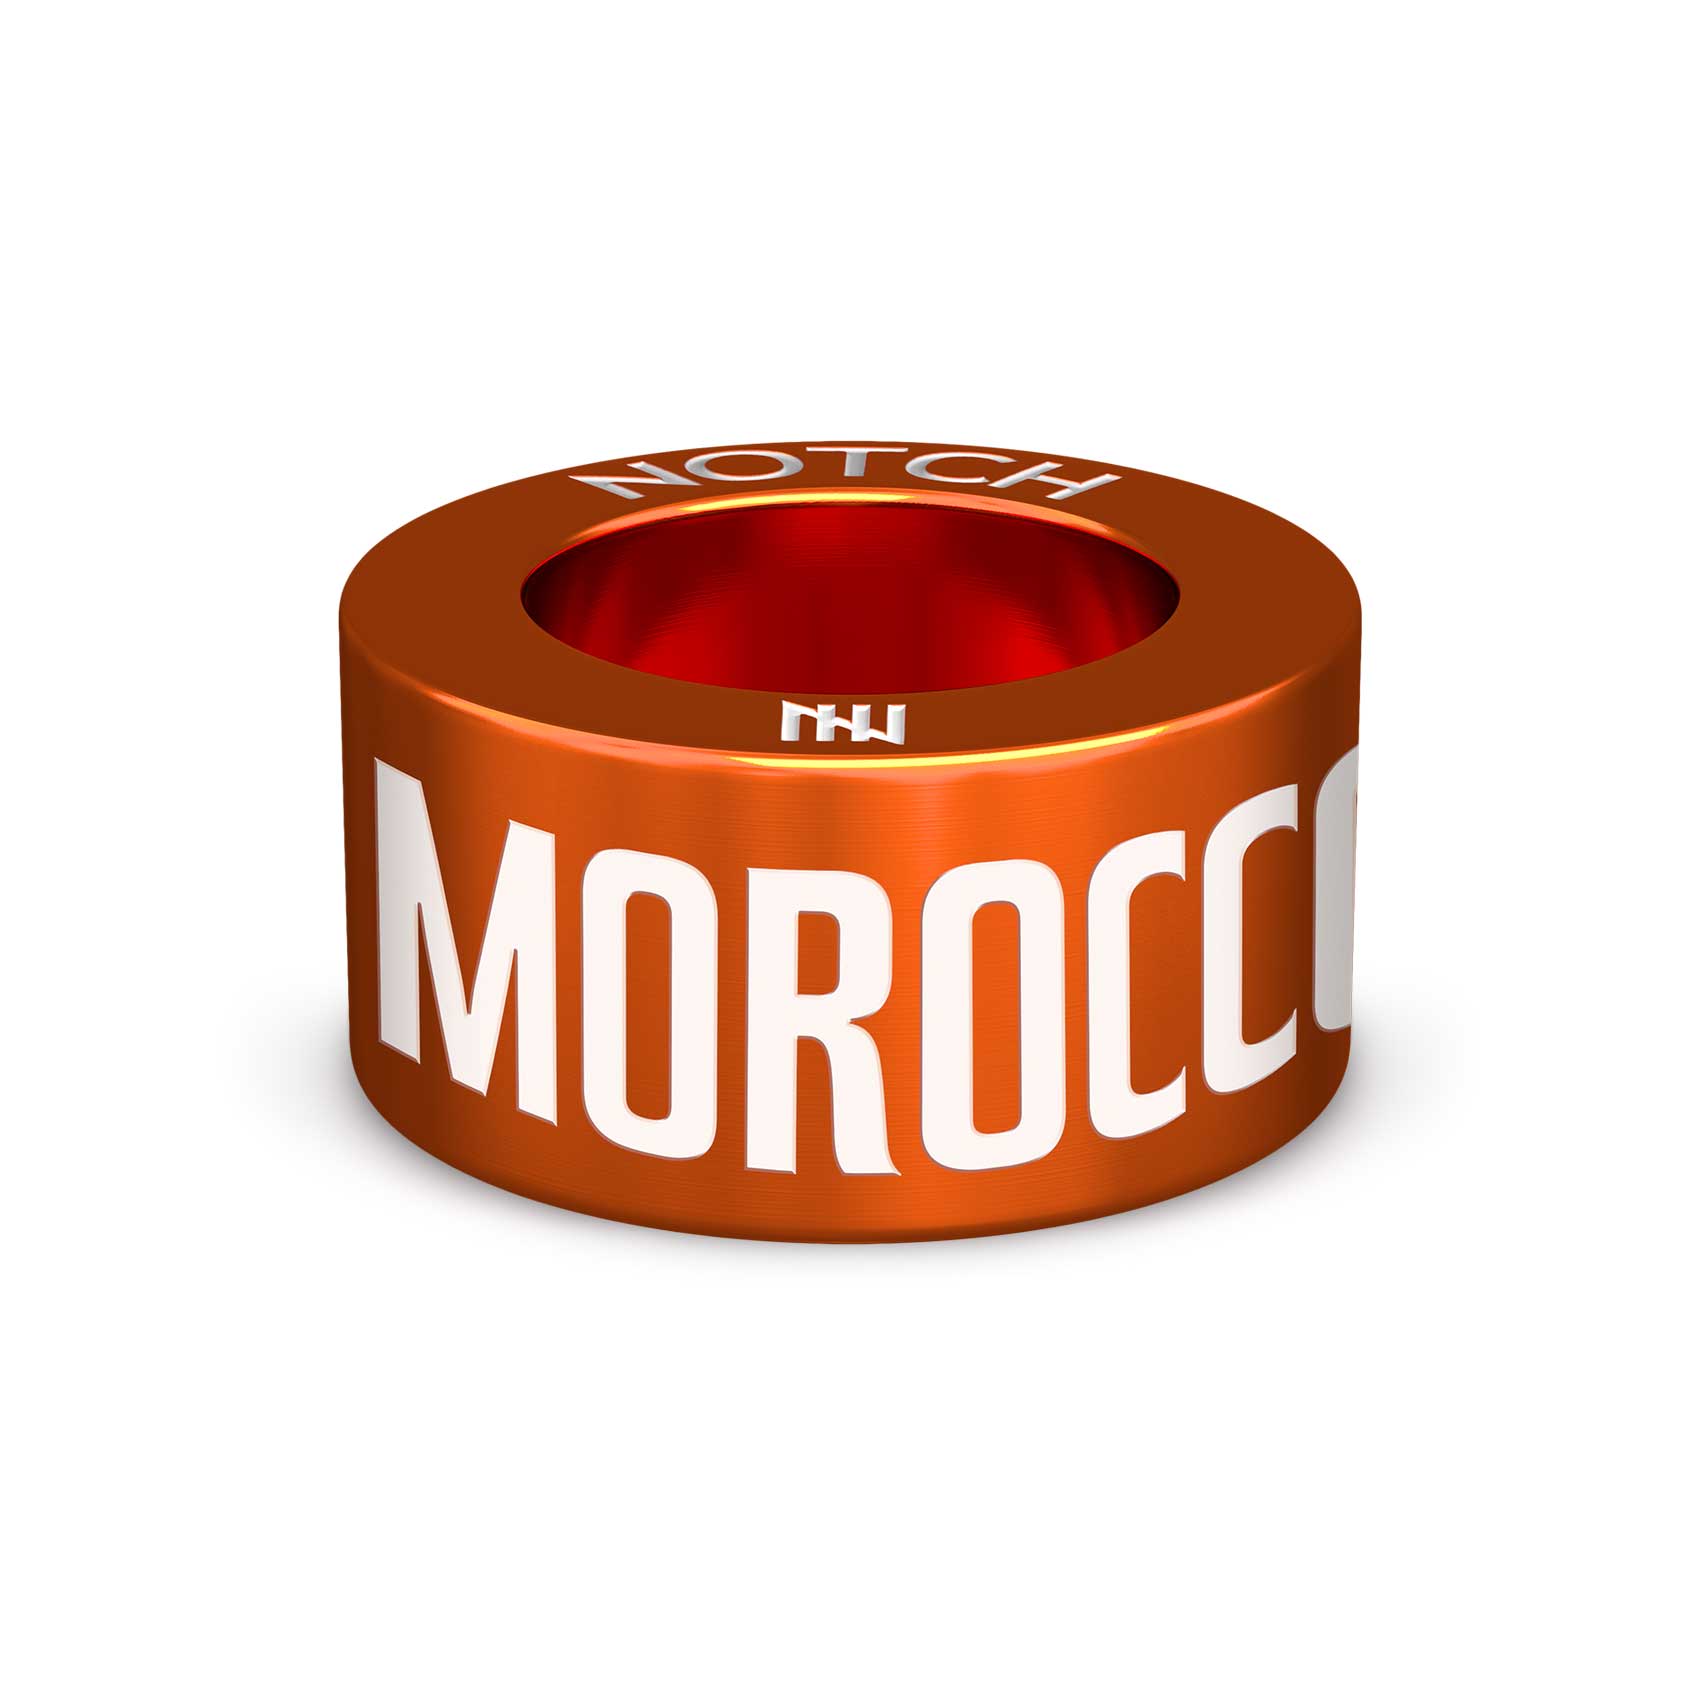 Morocco 110K NOTCH Charm